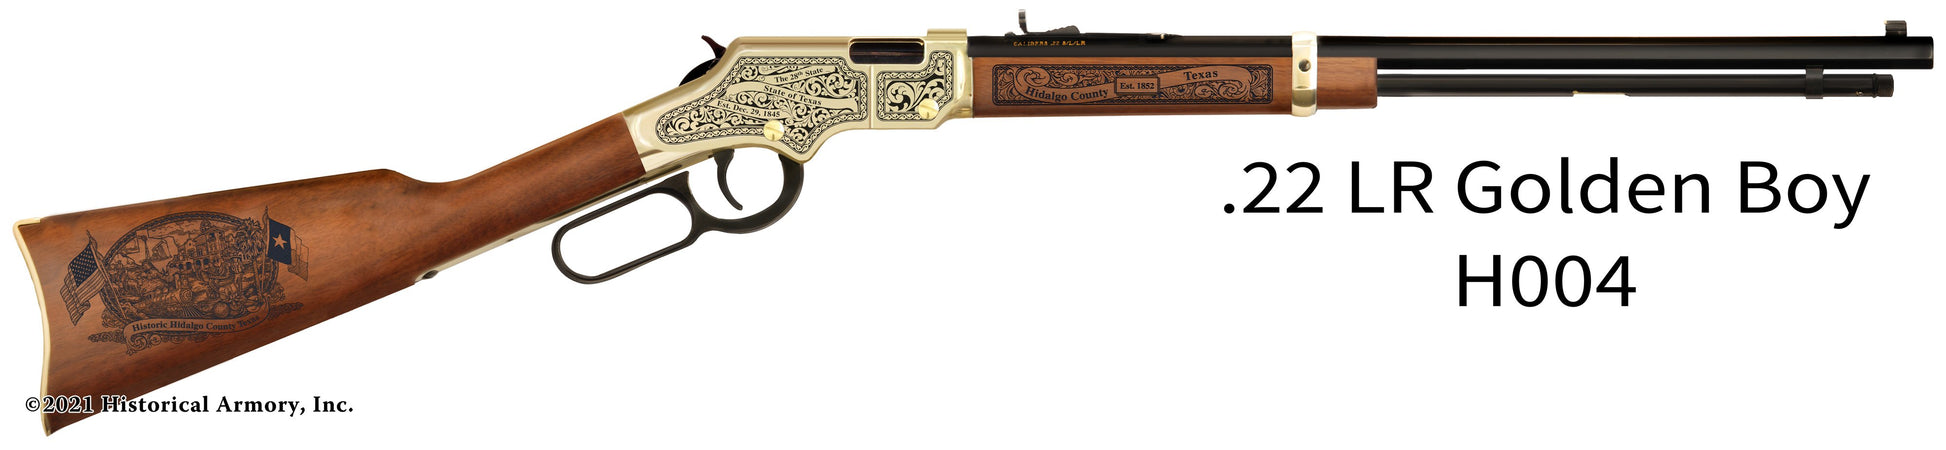 Hidalgo County Texas History Engraved  Rifle Henry Golden Boy .22 | Historical Armory